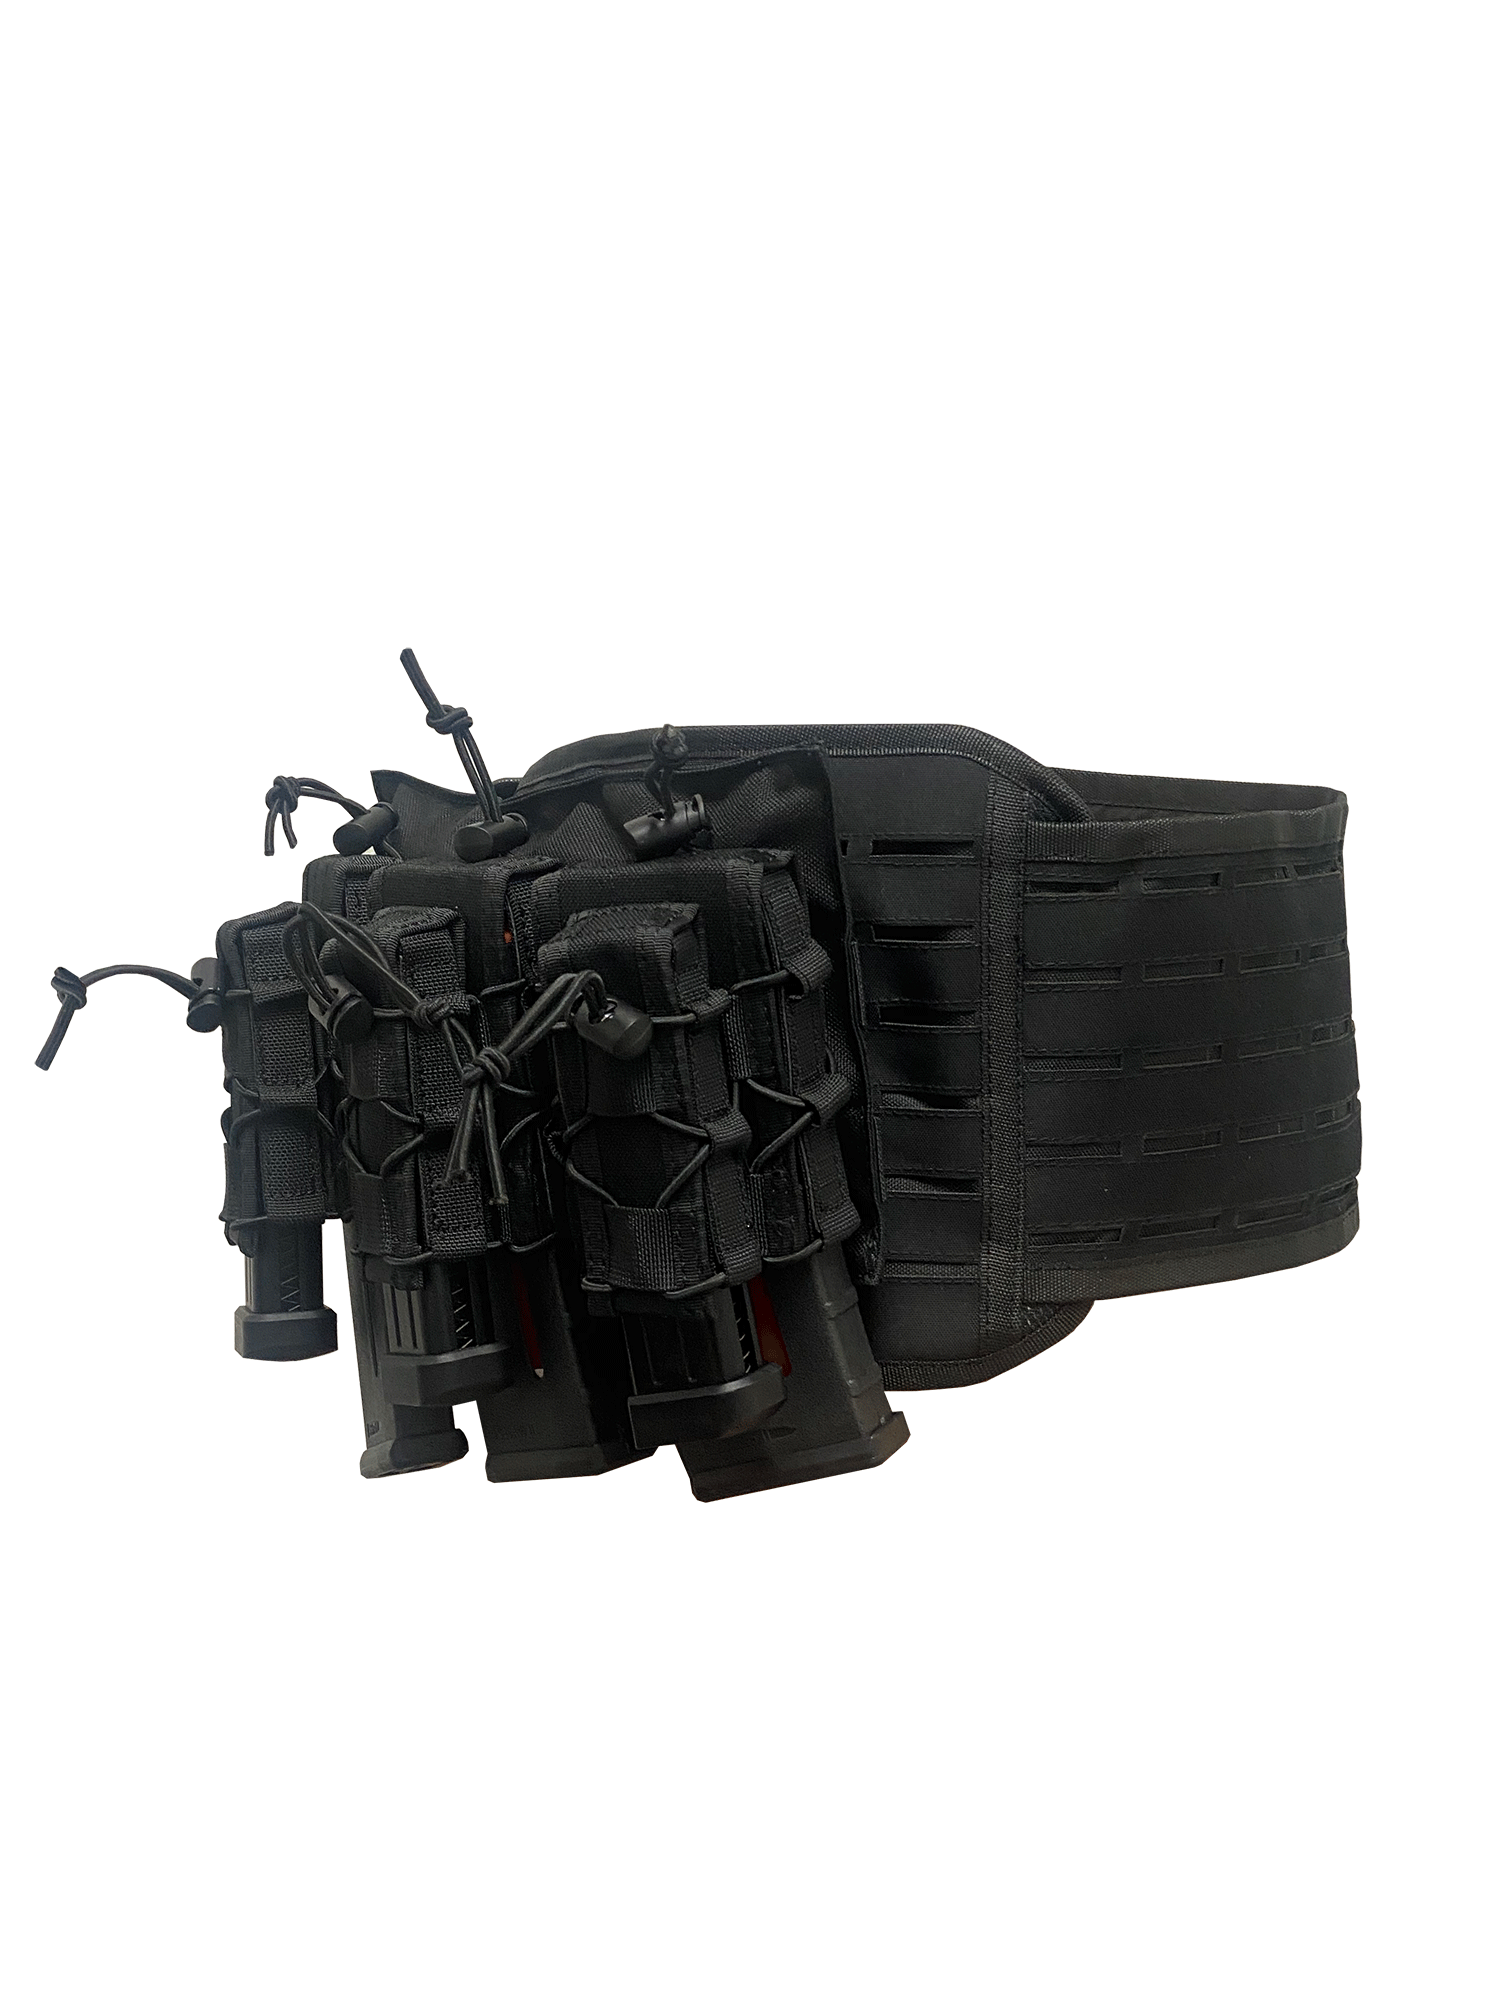 Gunfighter Airsoft Tac Pack - OD